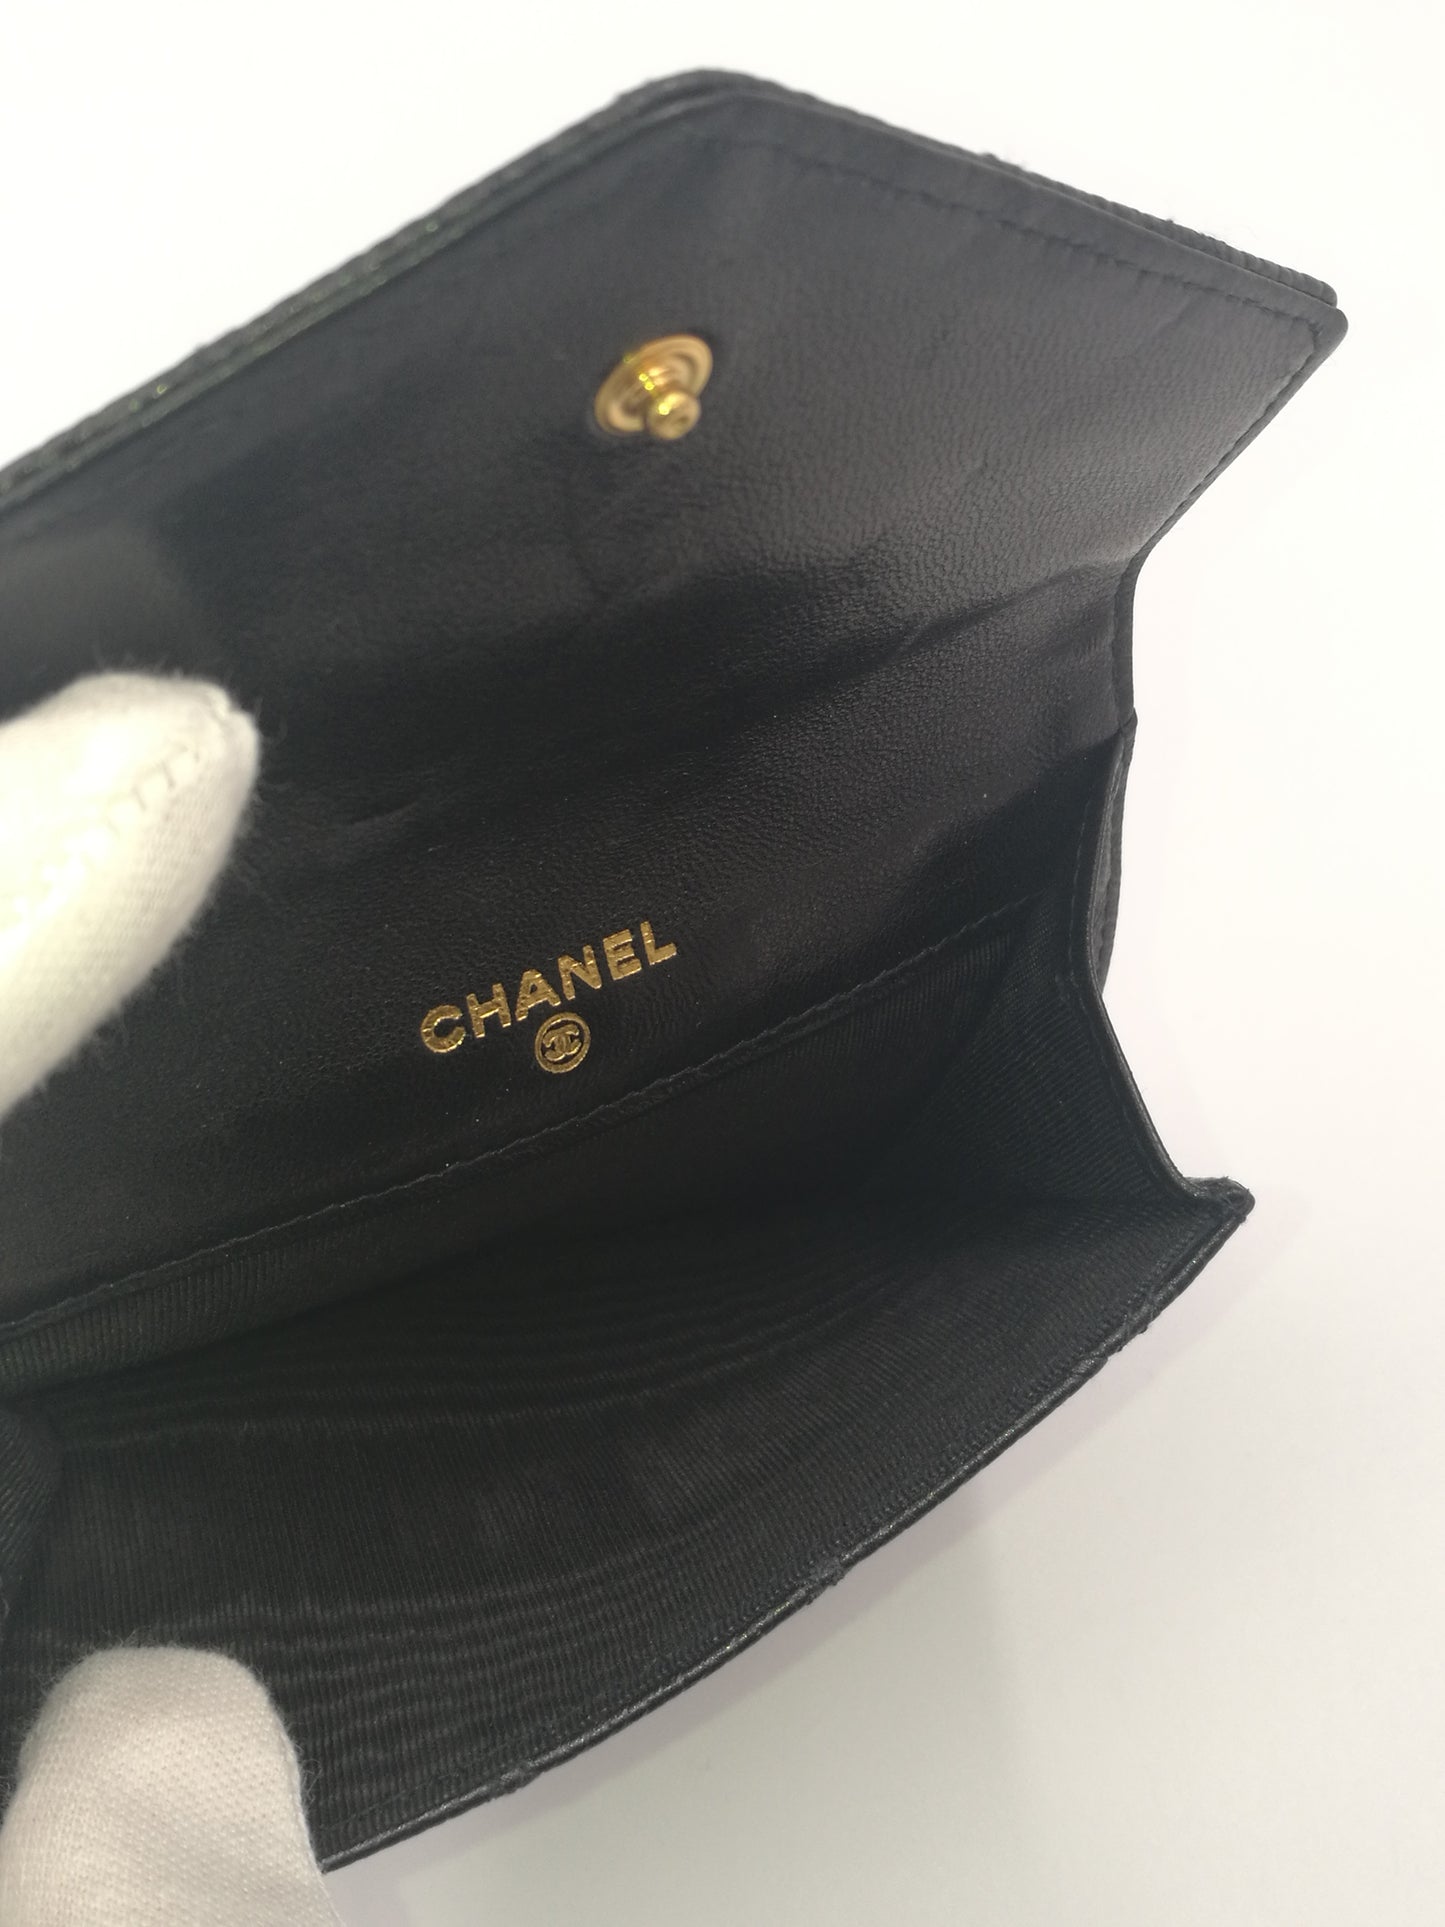 Chanel vintage wallet